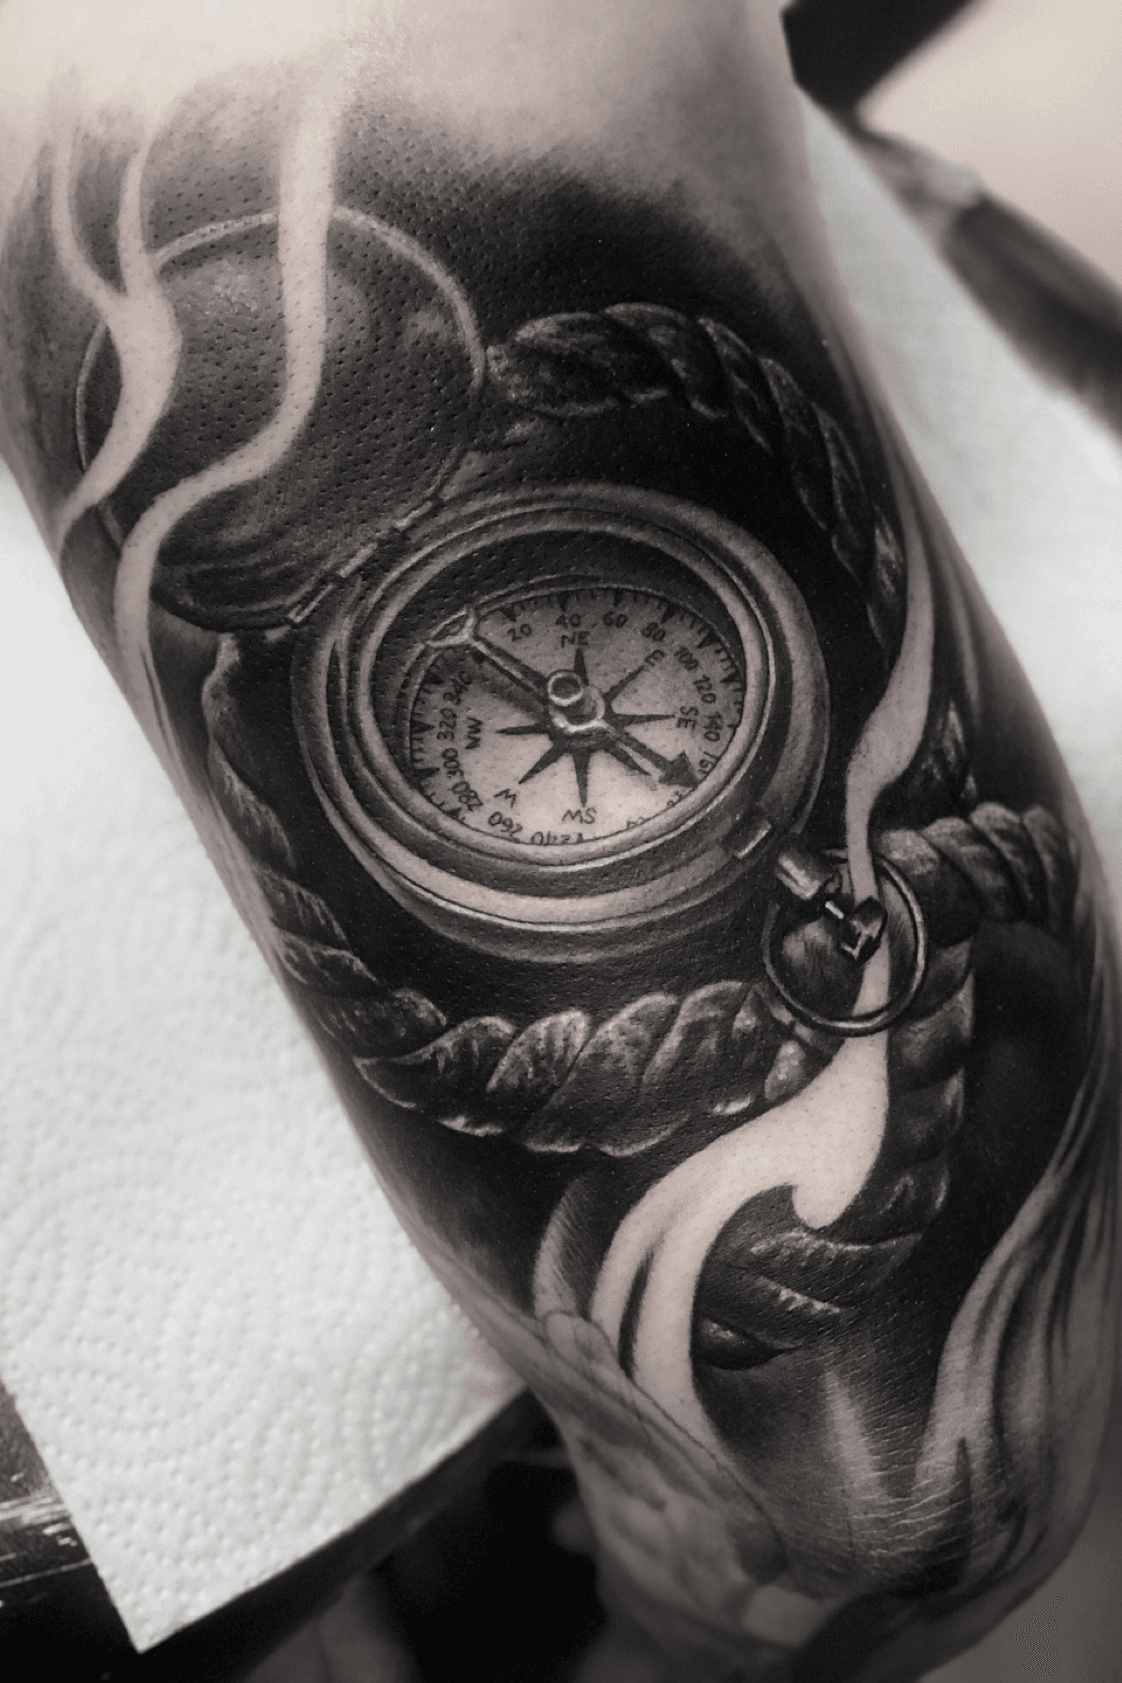 Explore the 20 Best Compass Tattoo Ideas 2021  Tattoodo